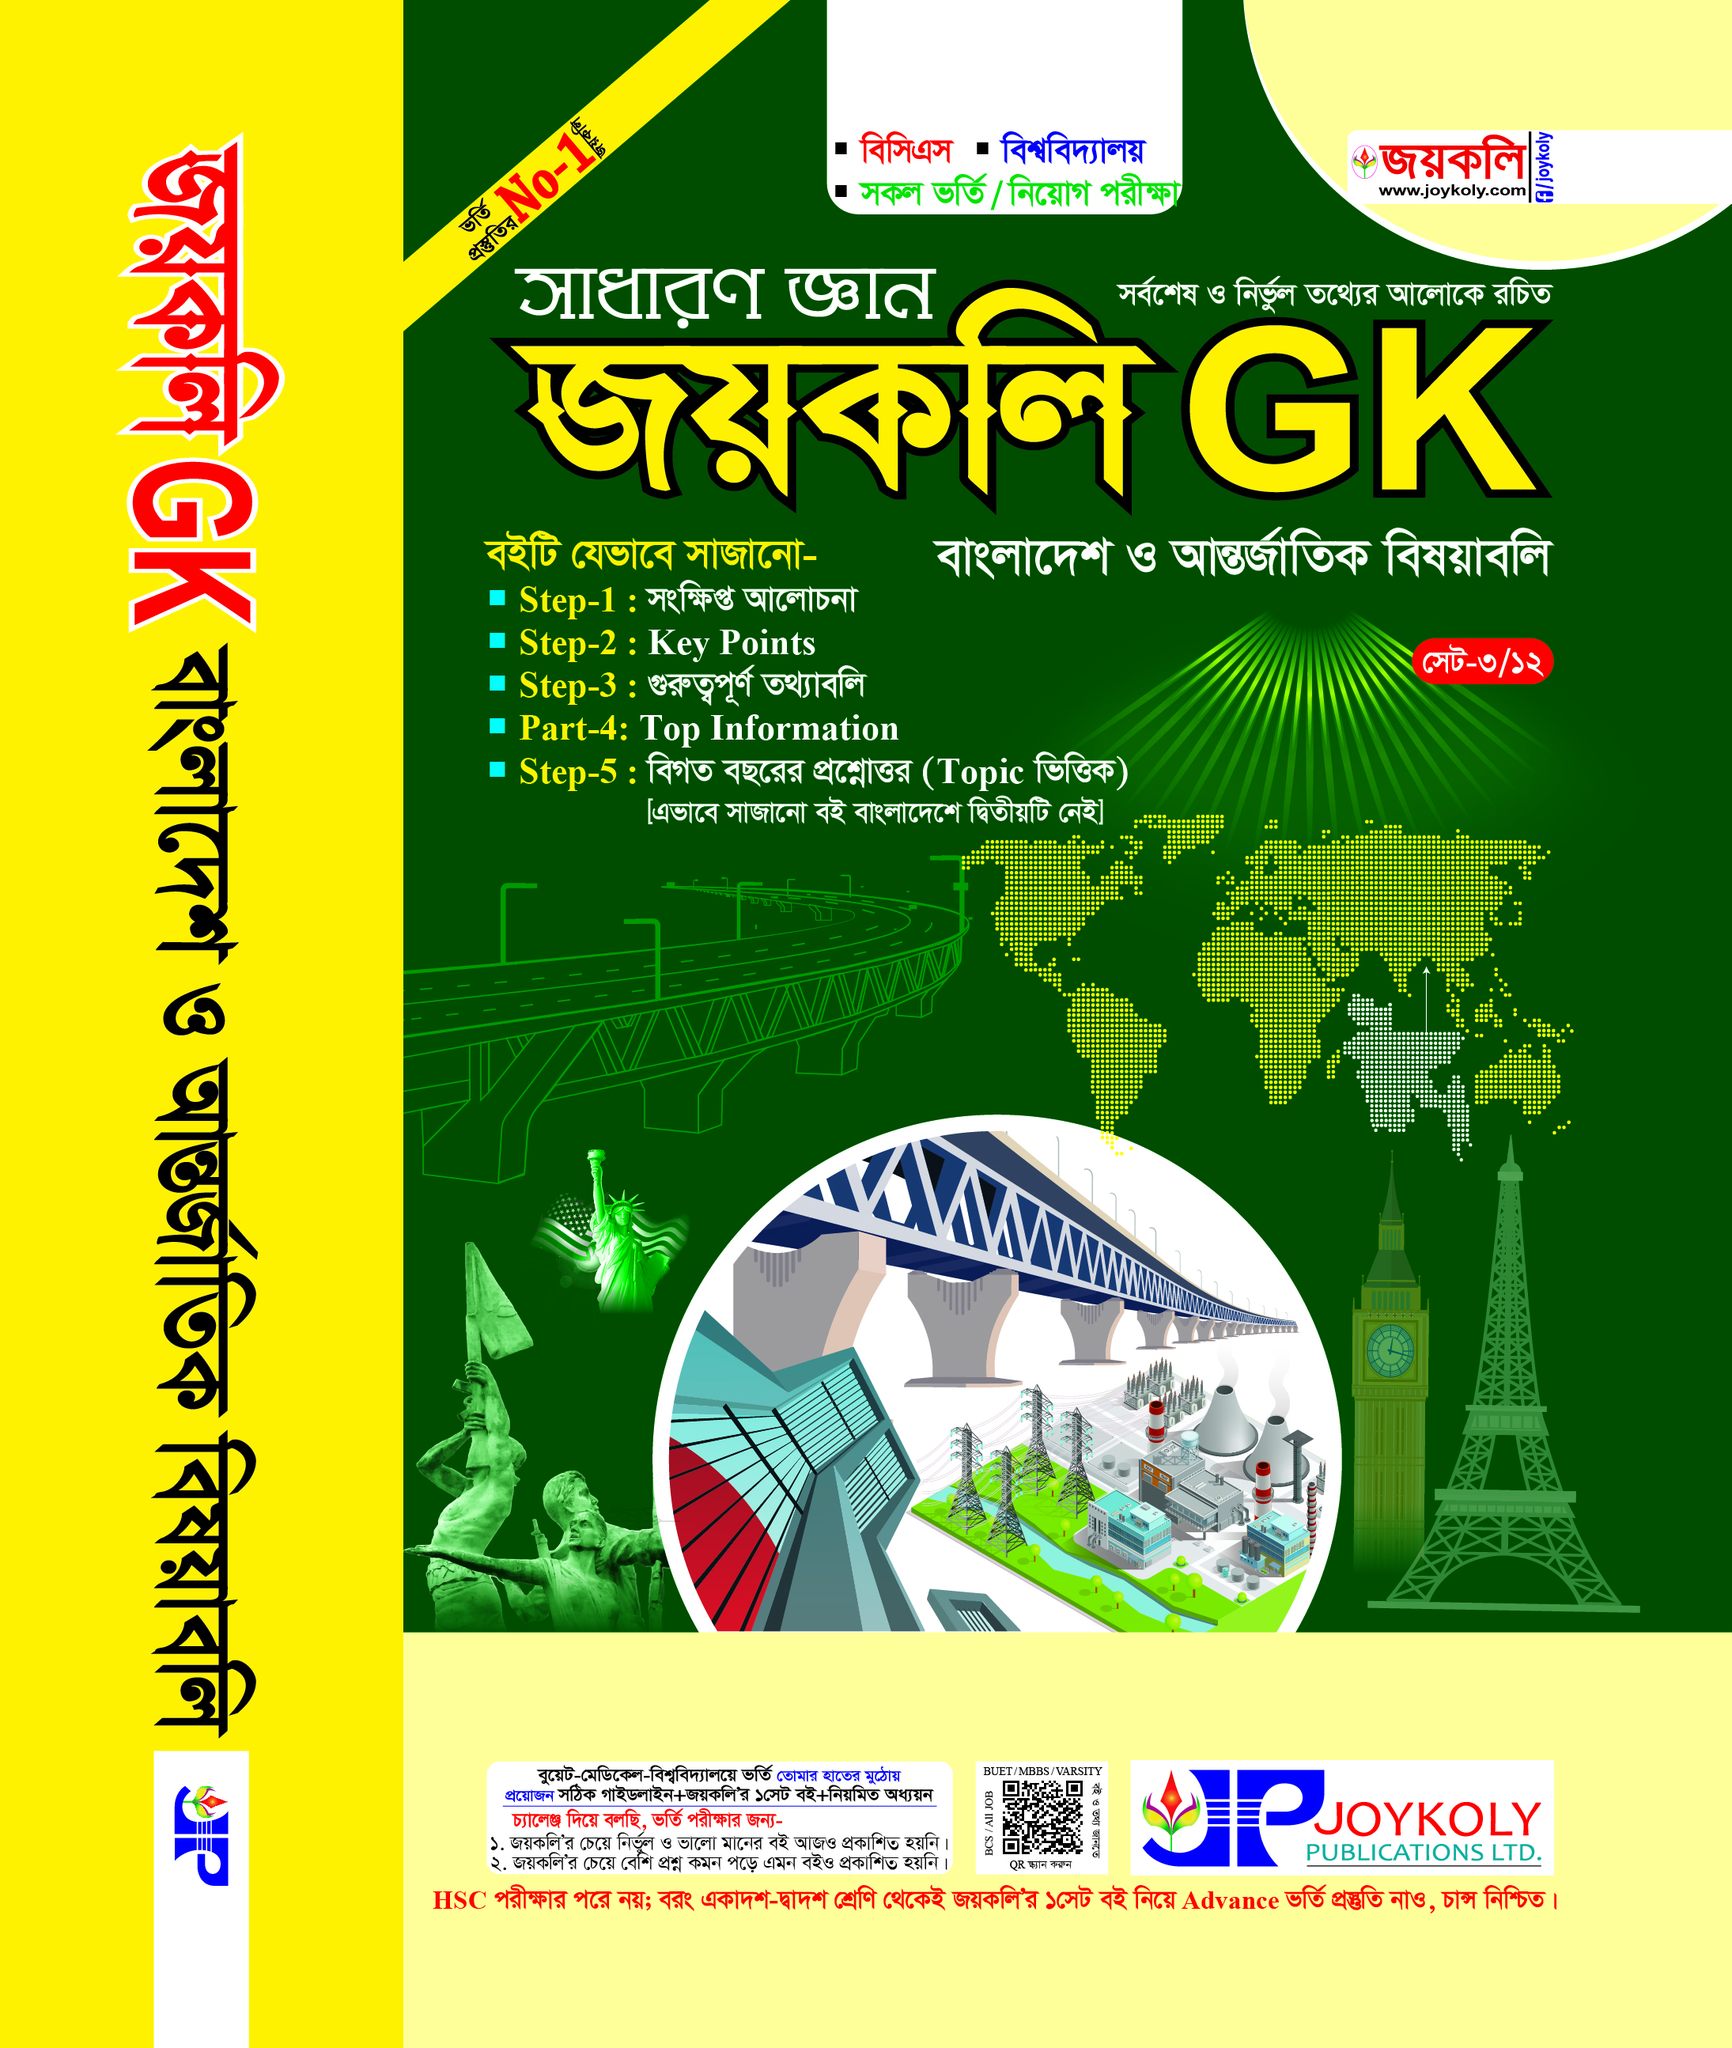 Joykoly GK (Bangladesh & International Affairs) for Admission